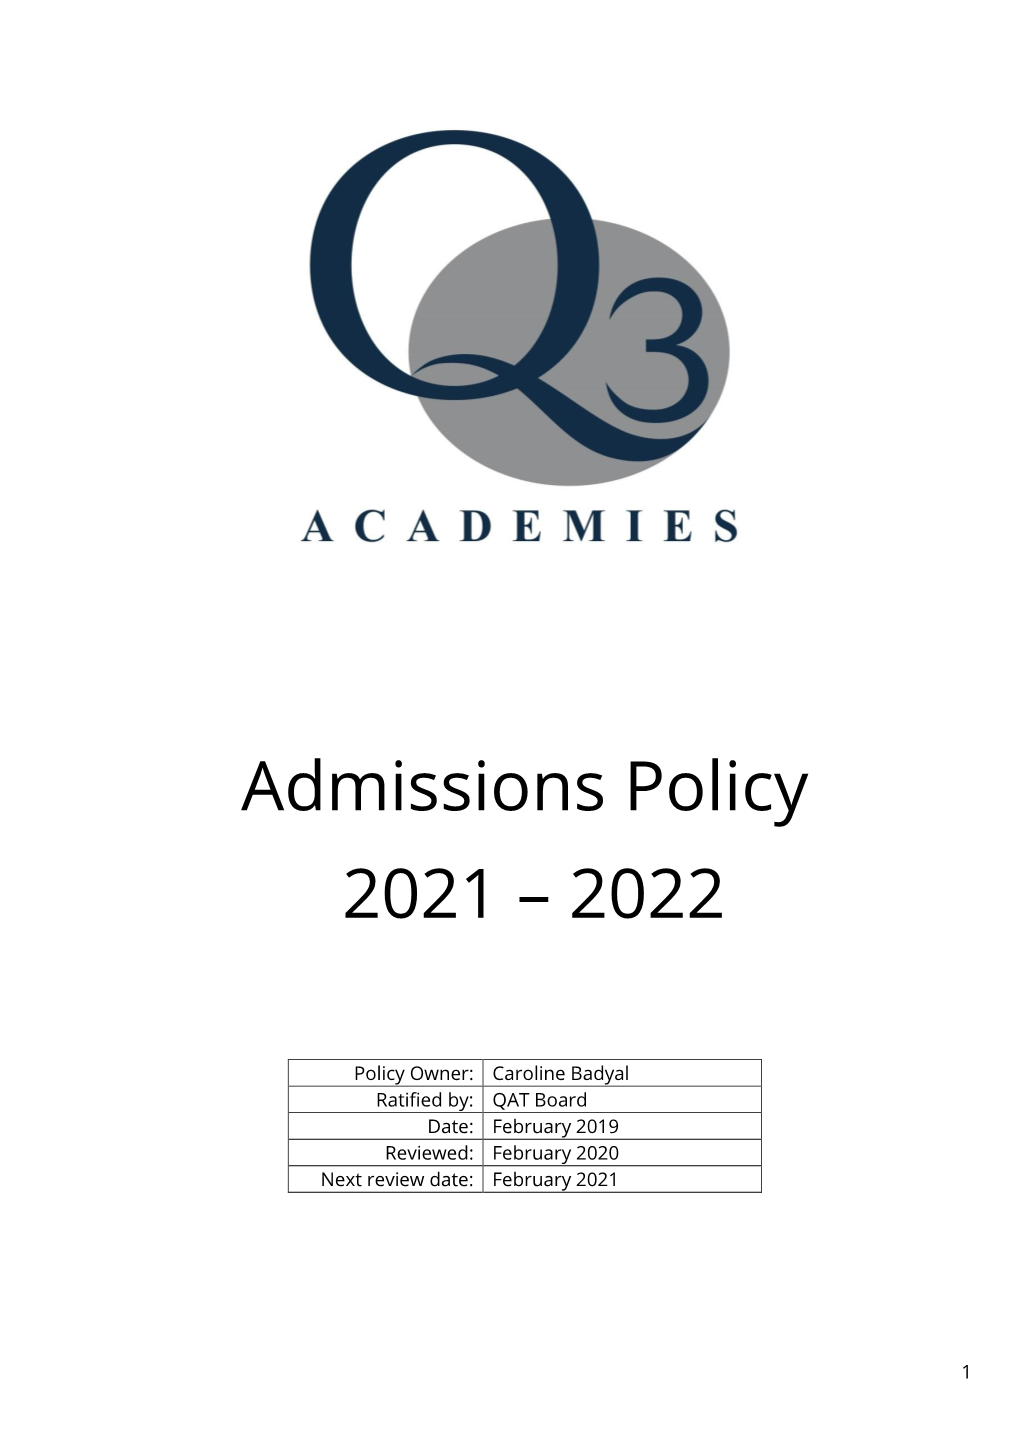 Q3 Academies Trust Admissions Policy (2021